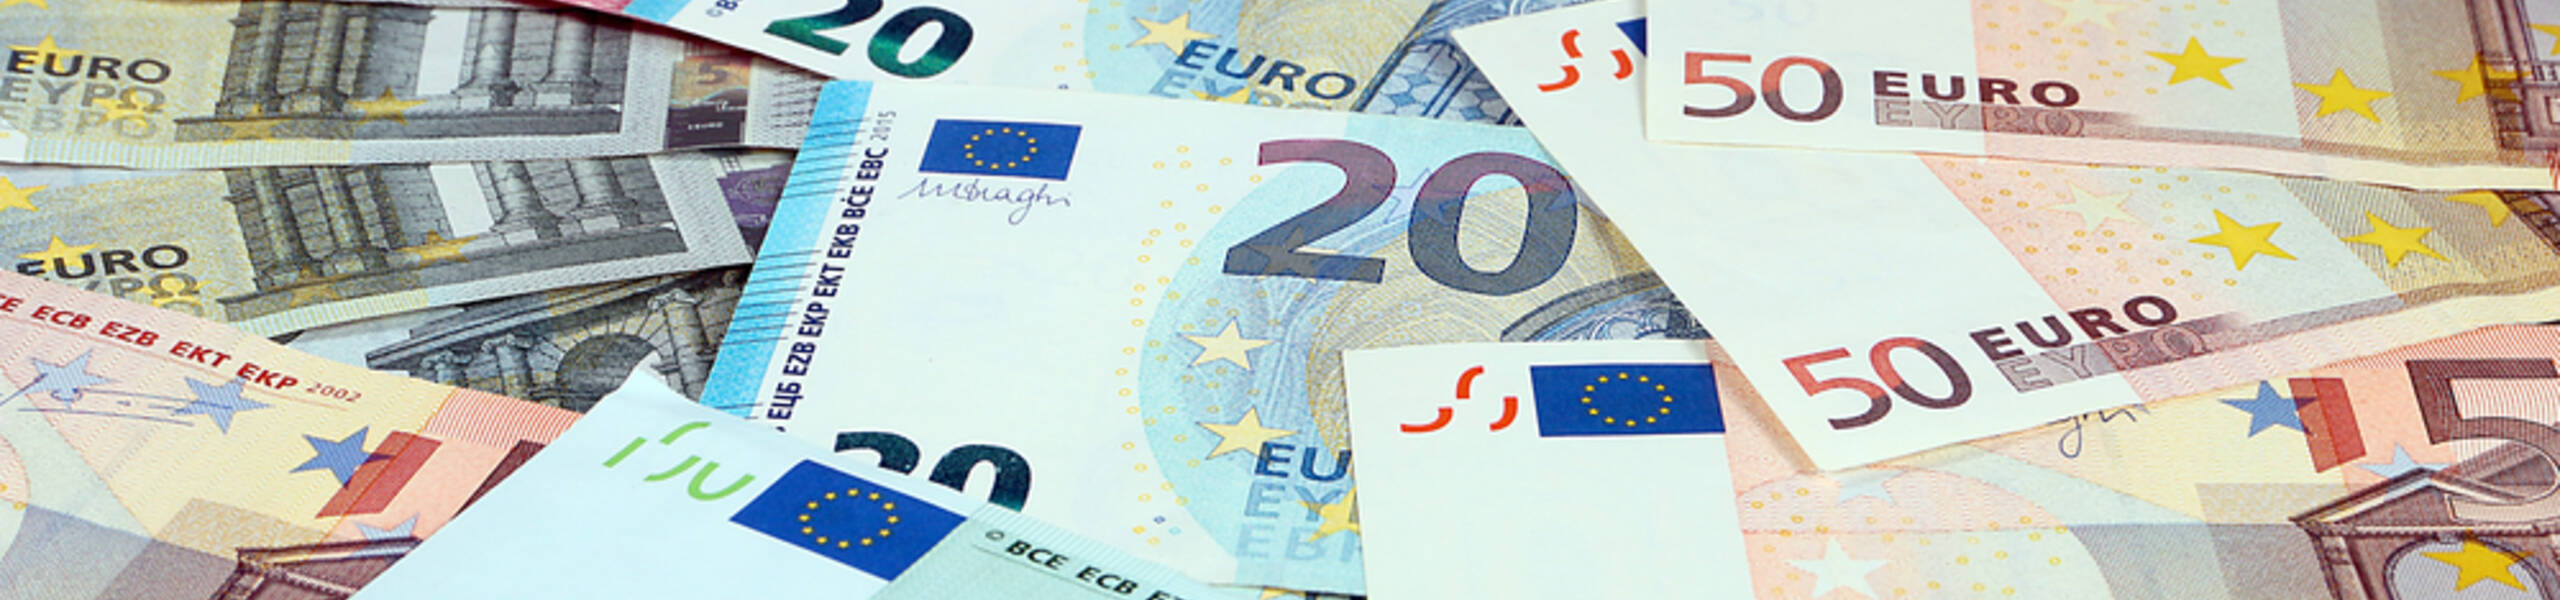 EUR/GBP : สัญญาณการเทรดจะทะลุขึ้นเทรนด์ได้หรือไม่